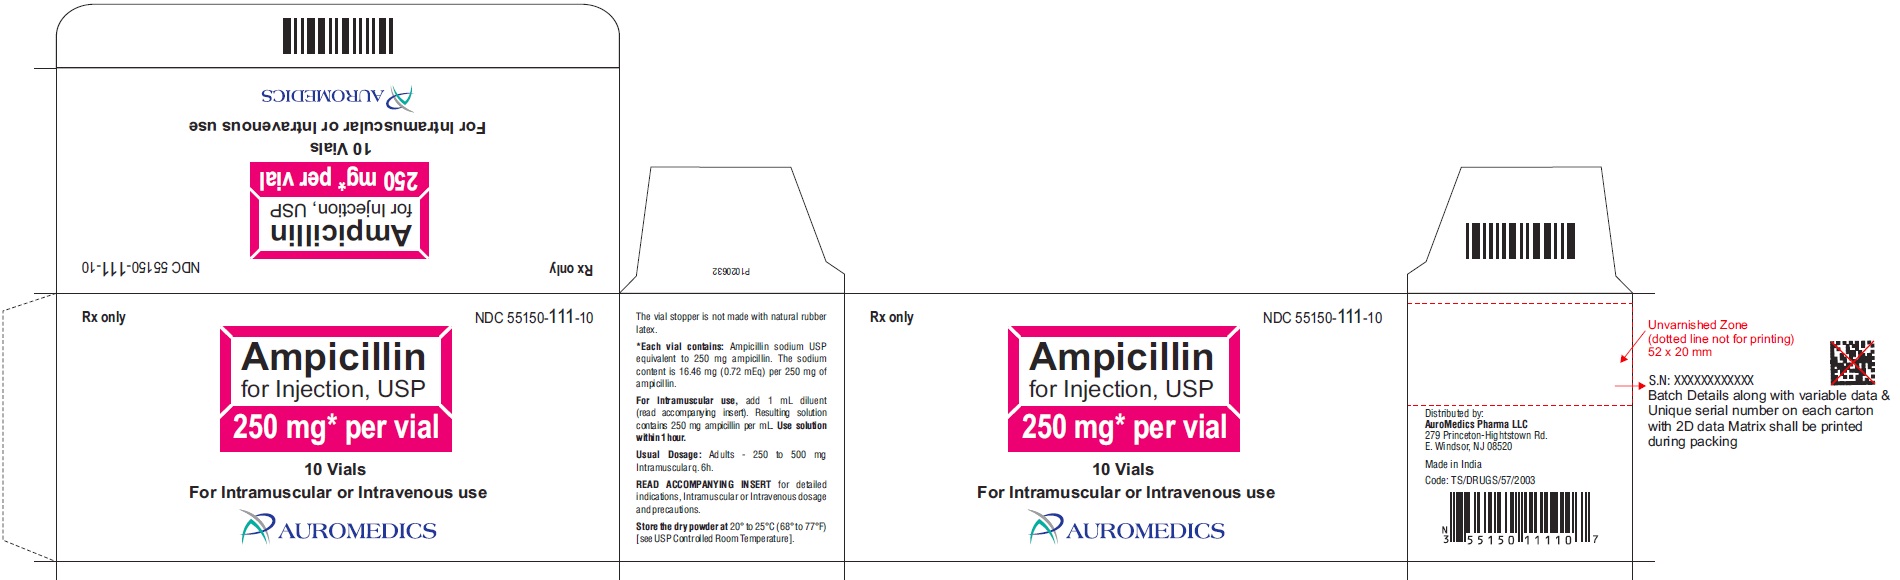 PACKAGE LABEL-PRINCIPAL DISPLAY PANEL - 250 mg Carton Label